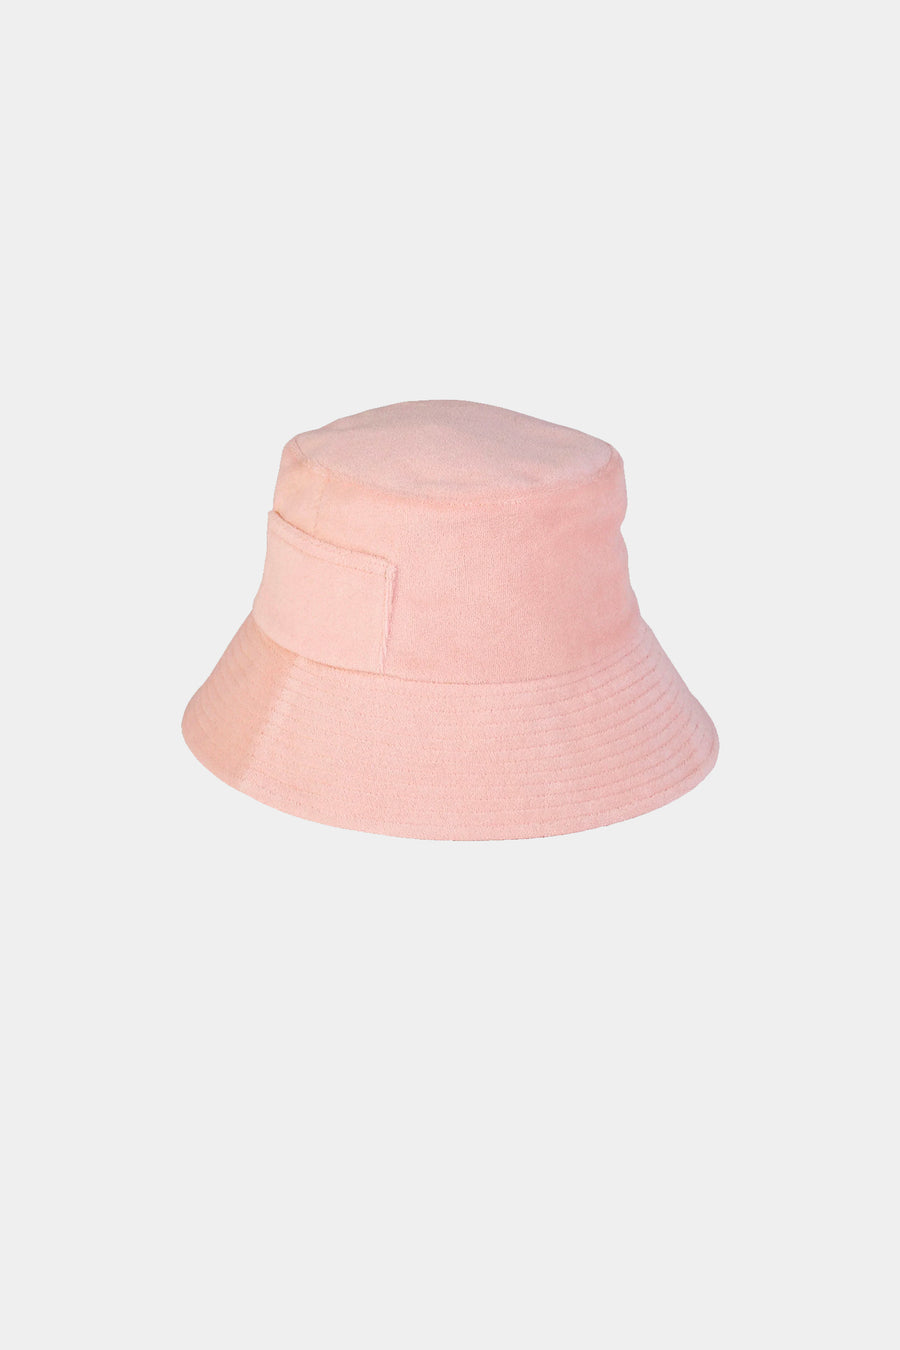 Lack of Color Wave Bucket Hat - Size S/M